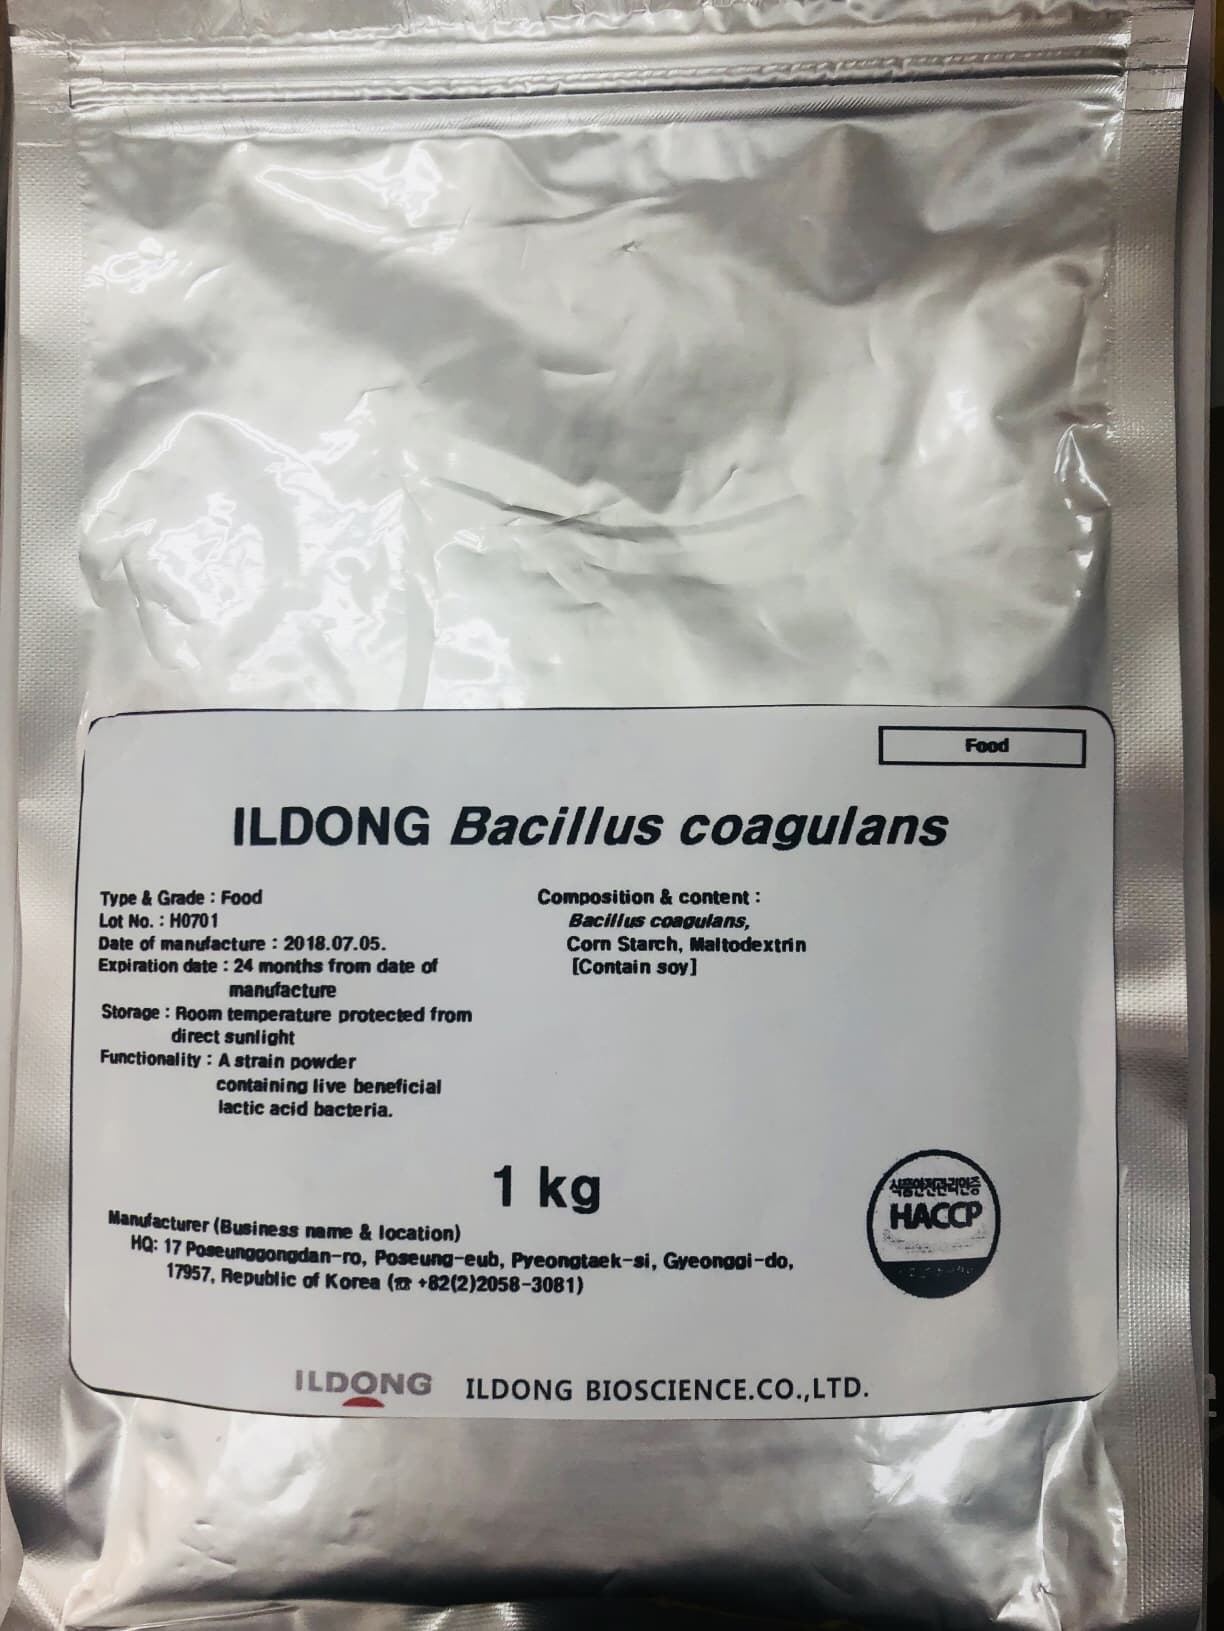 ILDONG Bacillus coagulans IDCC 1201